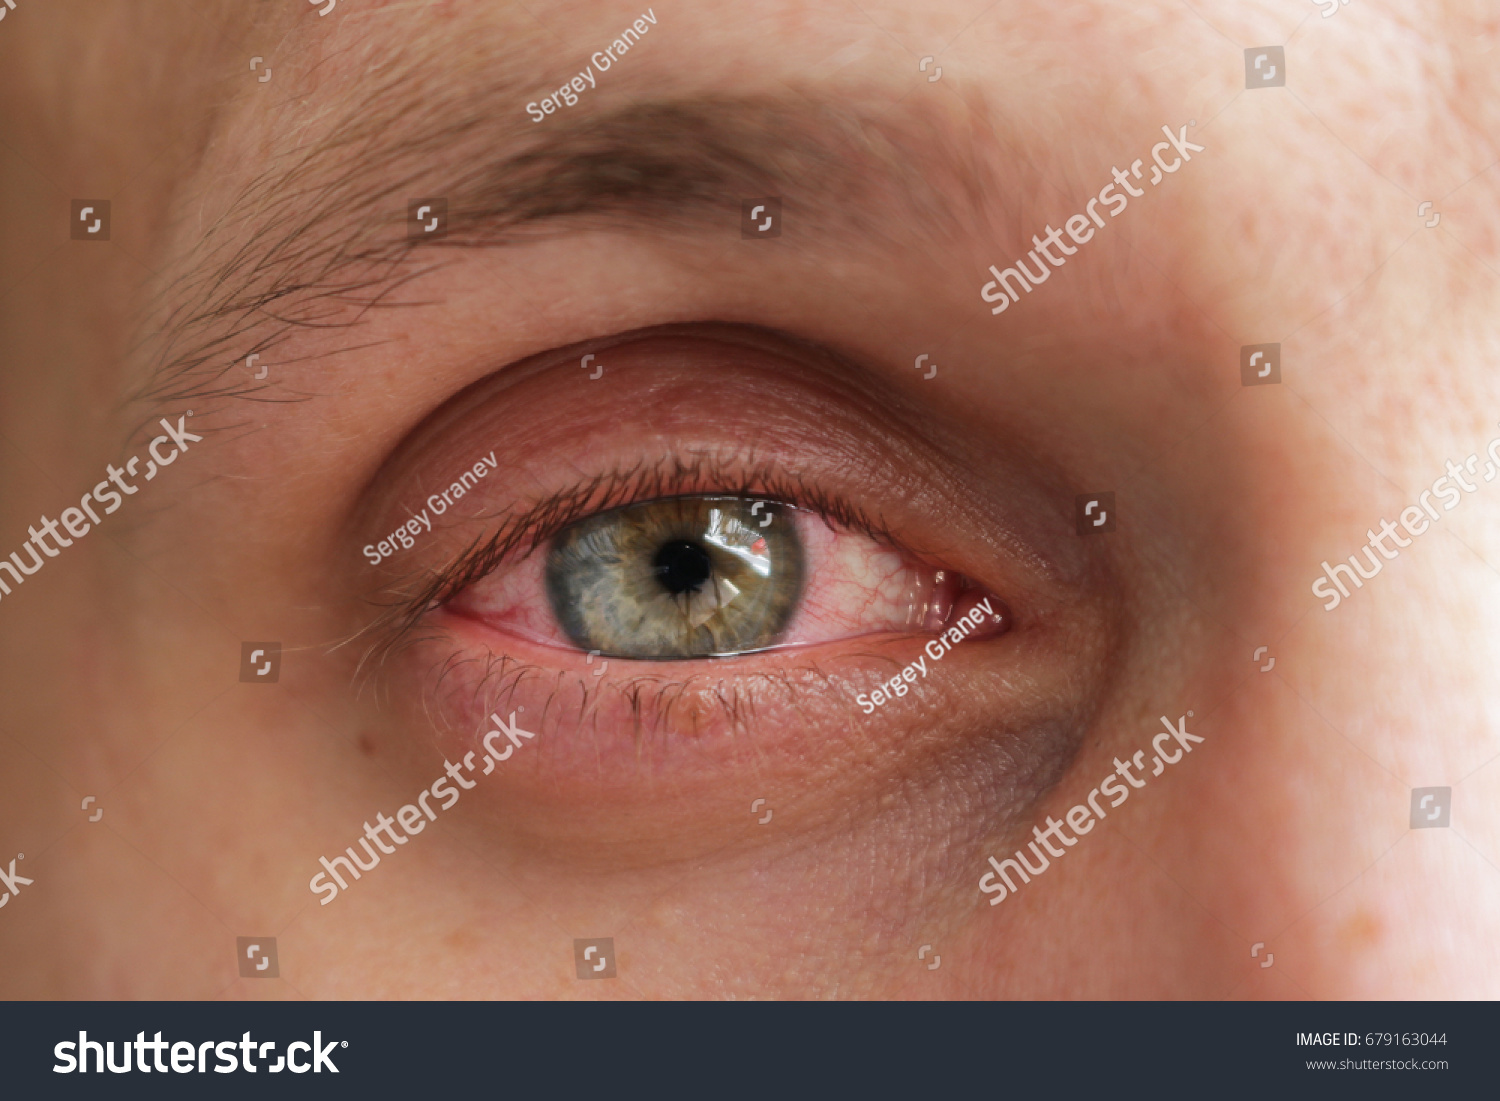 Red eye conjunctivitis #679163044